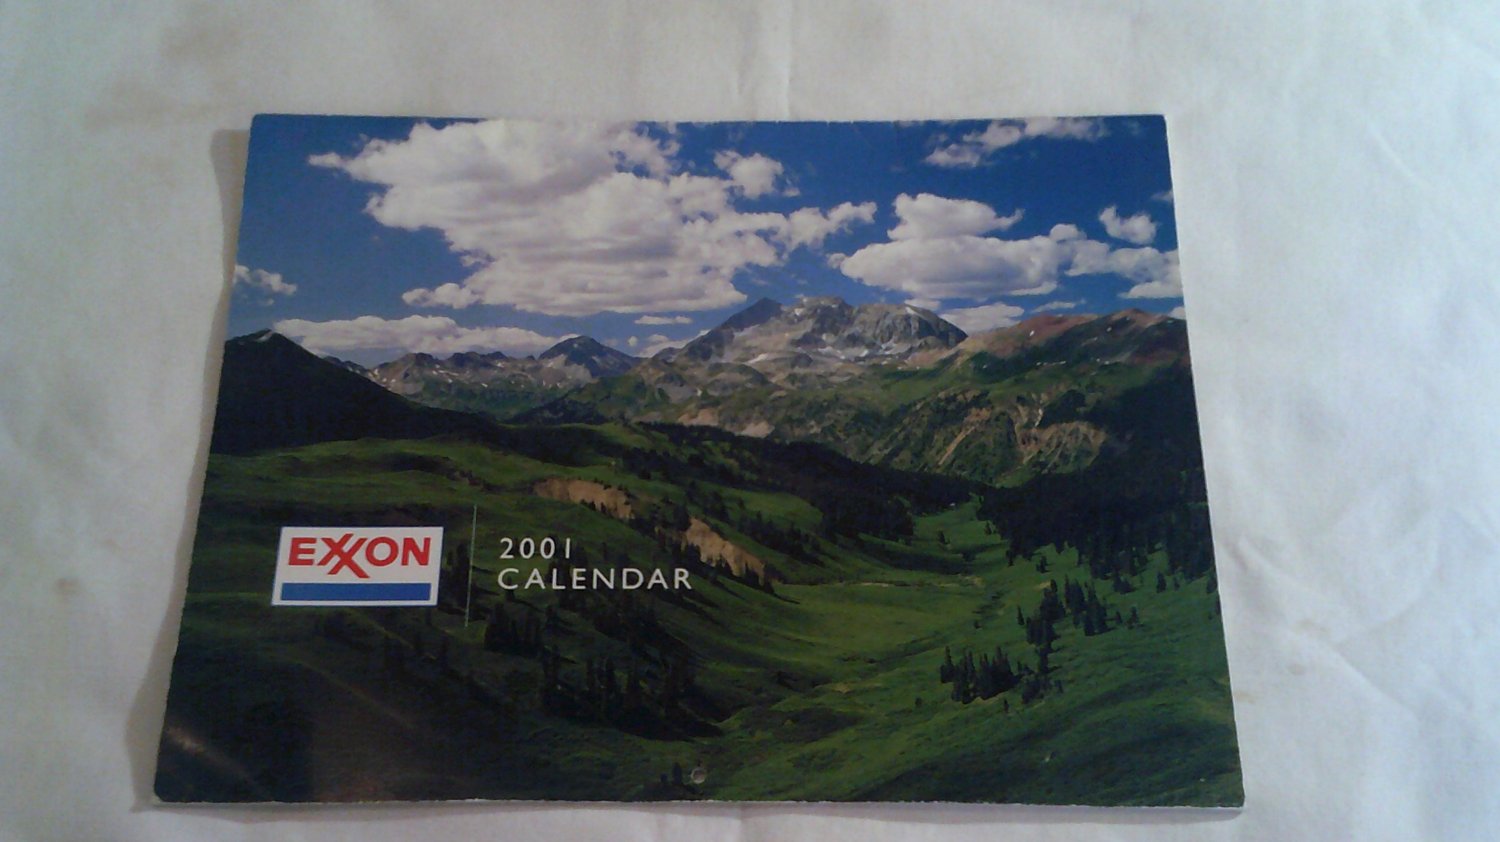 2001 Exxon Calendar All Hot Rod Cars by H. N. Funkhouser & Co